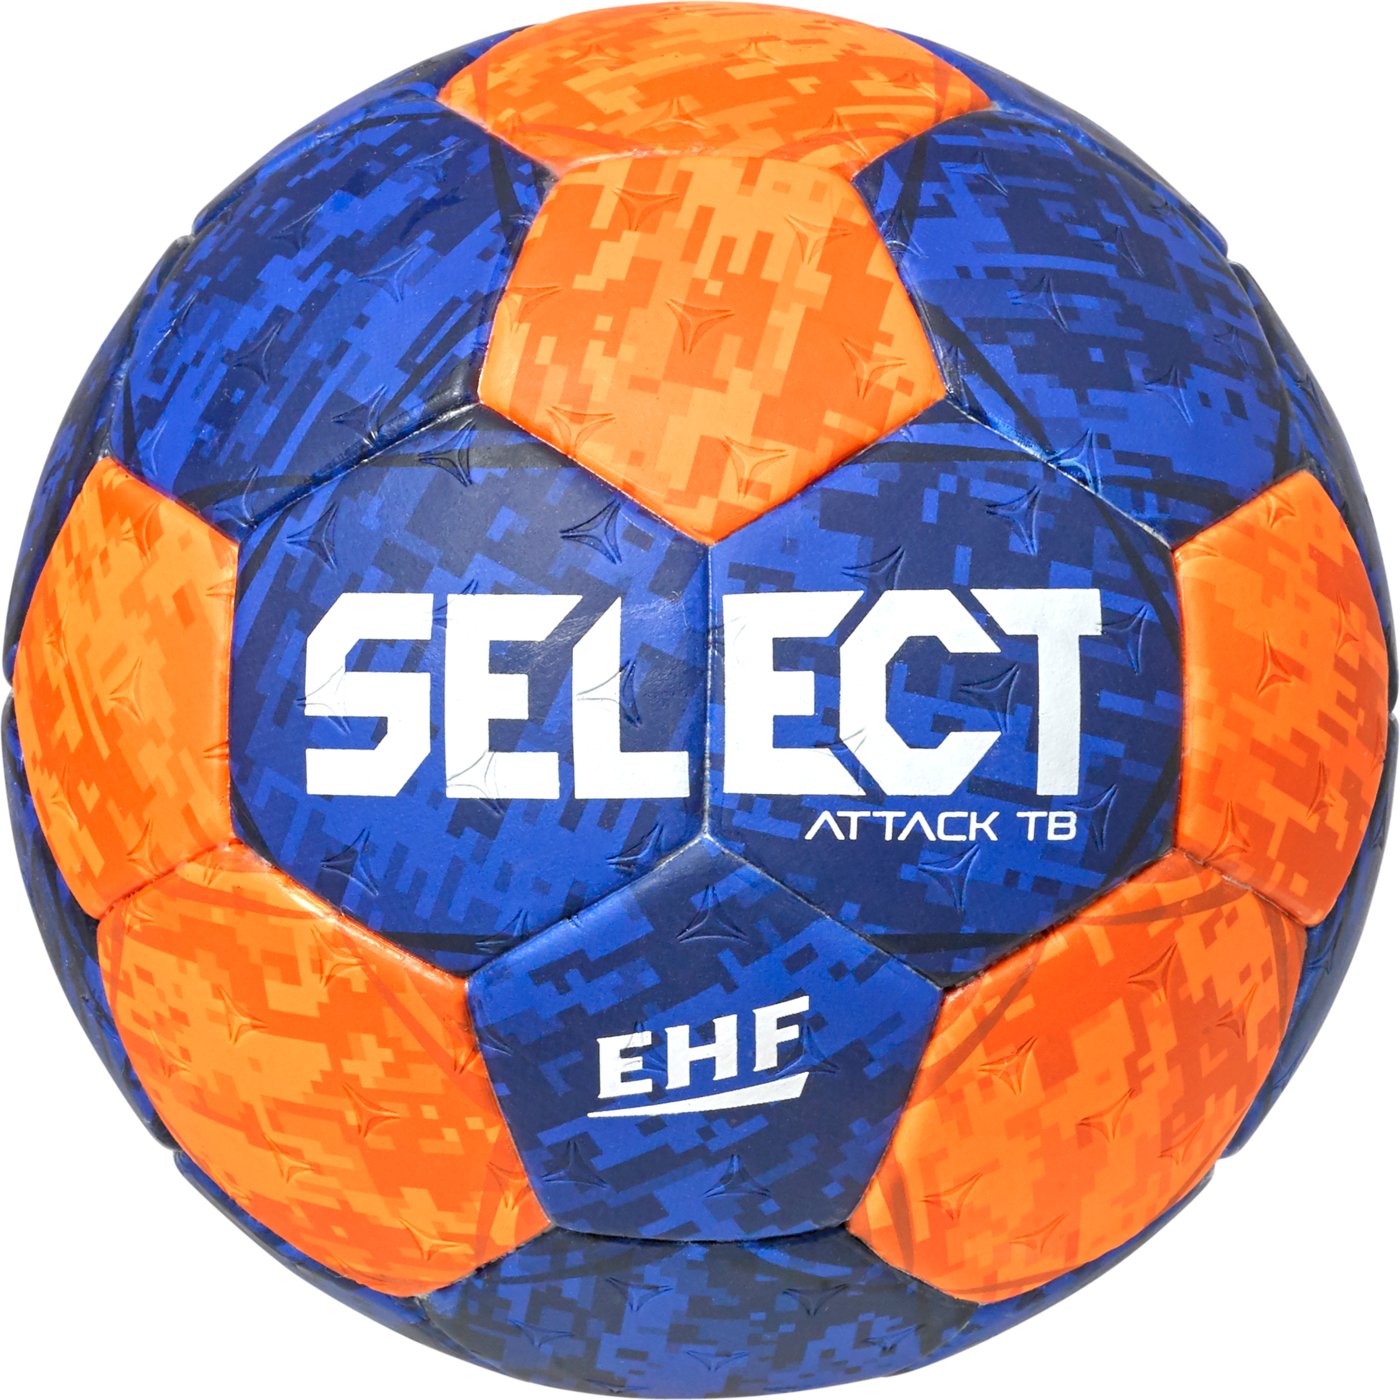 М'яч гандбольний SELECT Attack TB v22 (839) син/помаранчевий, lilleput (1), синій/помаранчевий, mini 0